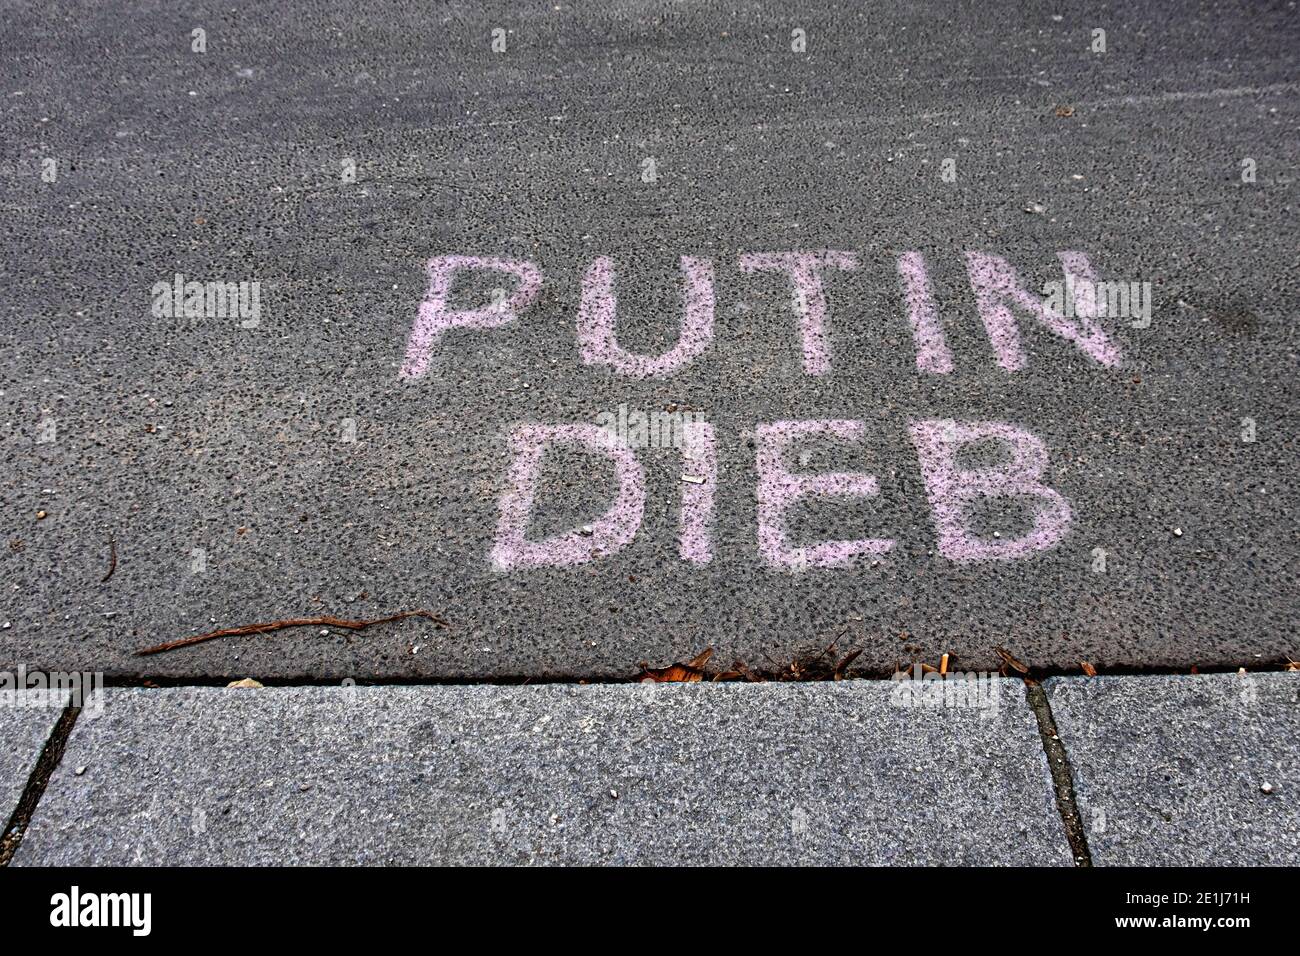 Putin Dieb, Putin thief, pink graffiti message on tar road in Mitte,Berlin,Germany Stock Photo